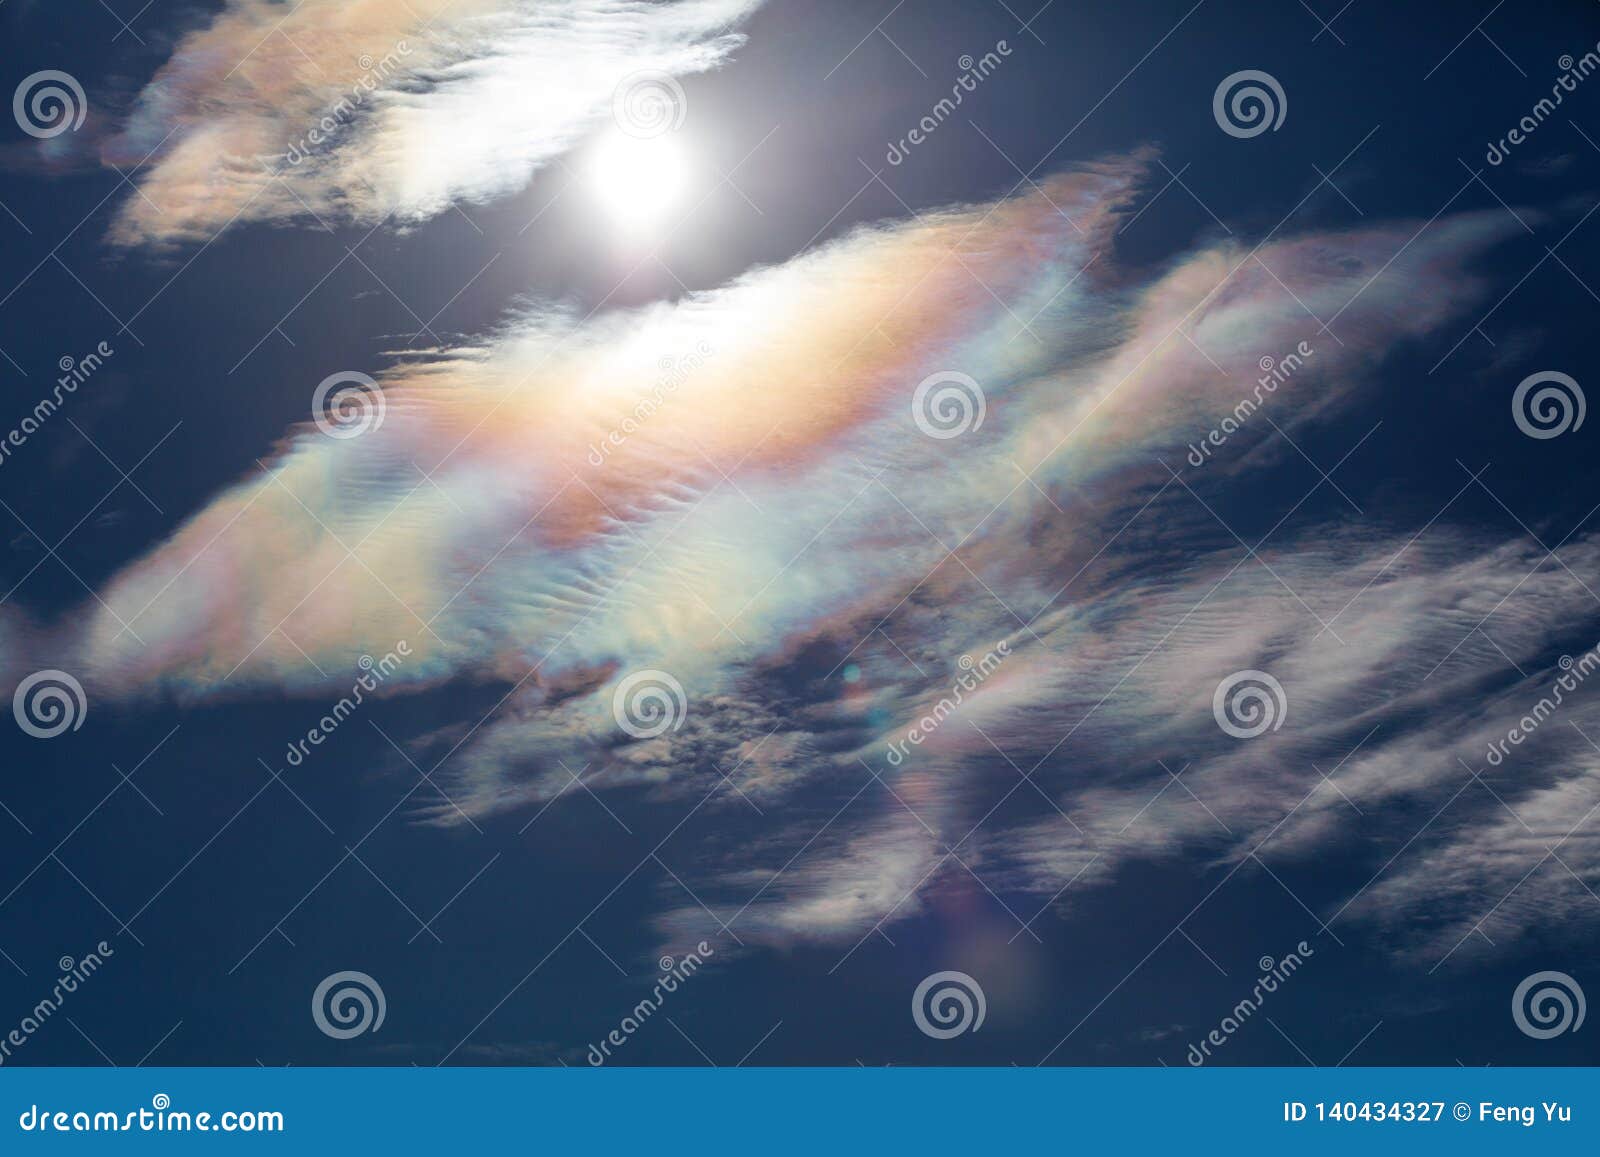 colorful cloud iridescence